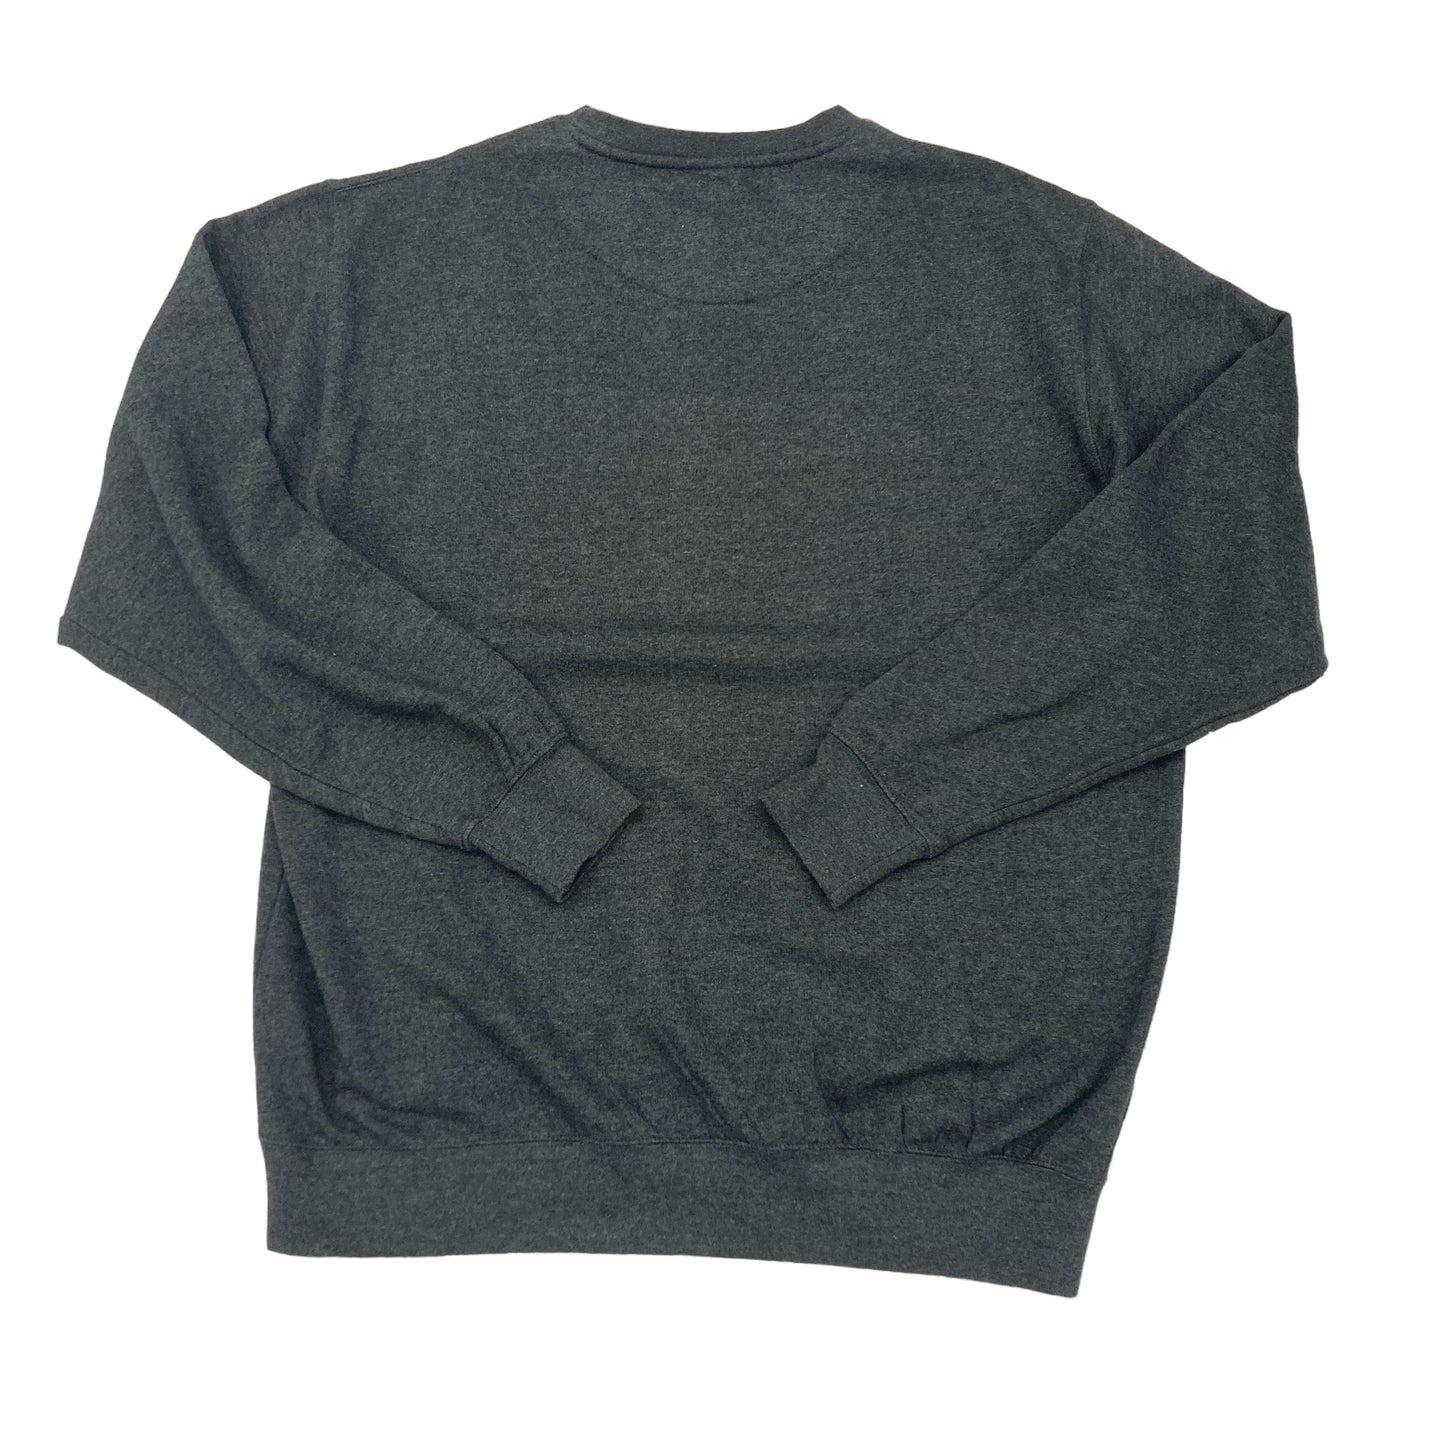 Sweatshirt Crewneck By Clothes Mentor  Size: 2x